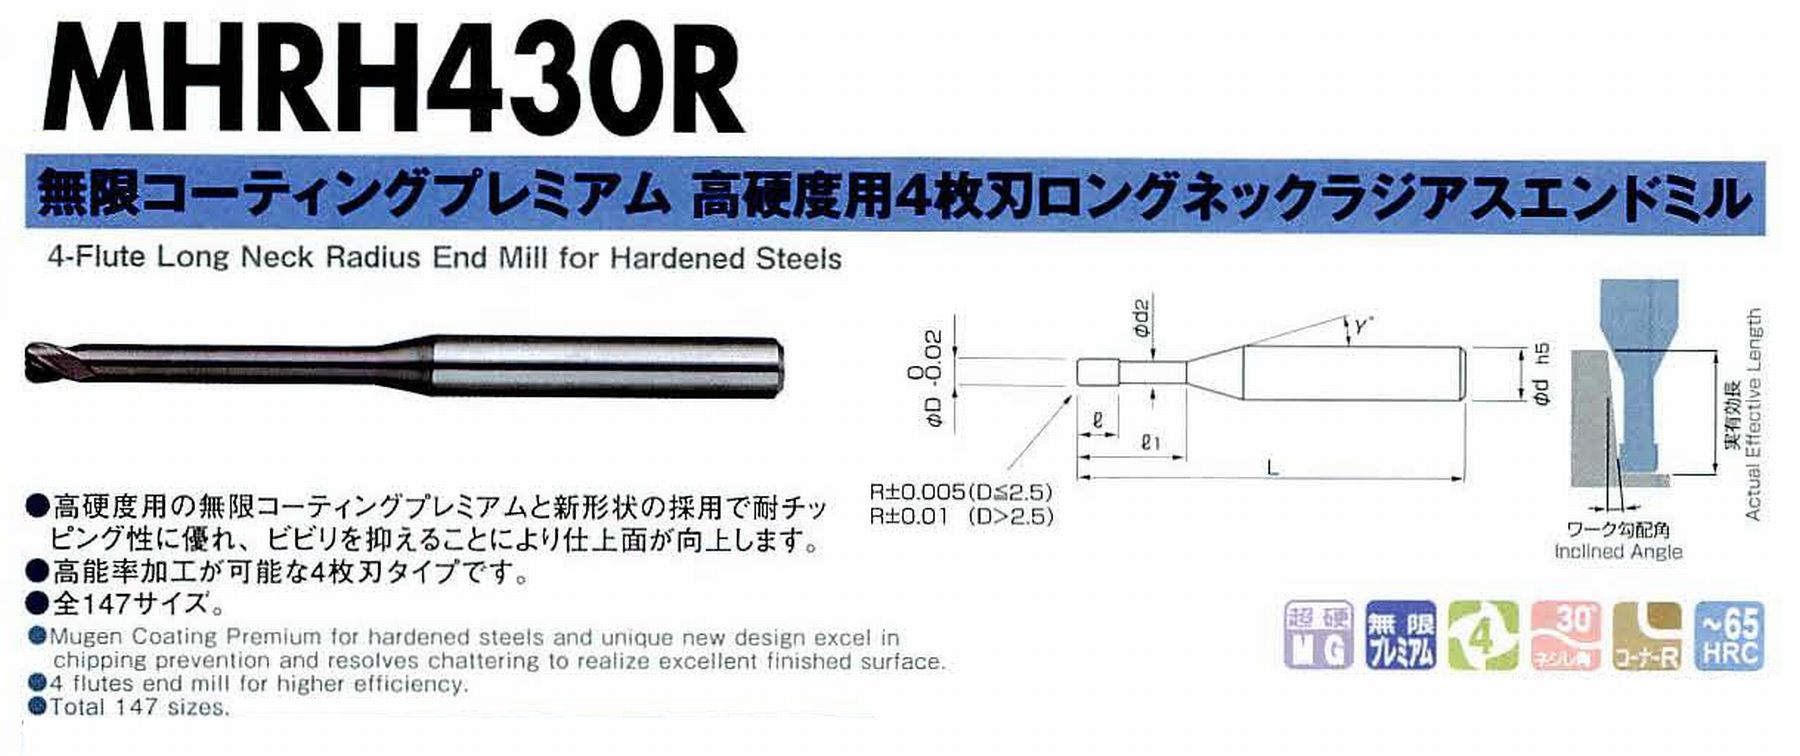 NS 日進工具 MHRH430R 無限コーティングプレミアム高硬度用4枚刃ロングネックラジアスエンドミル コードNO．08-00237-10103 刃径1 コーナー半径R0.1 有効長6 刃長0.8 首下径0.95 首角12° シャンク径4mm 全長50